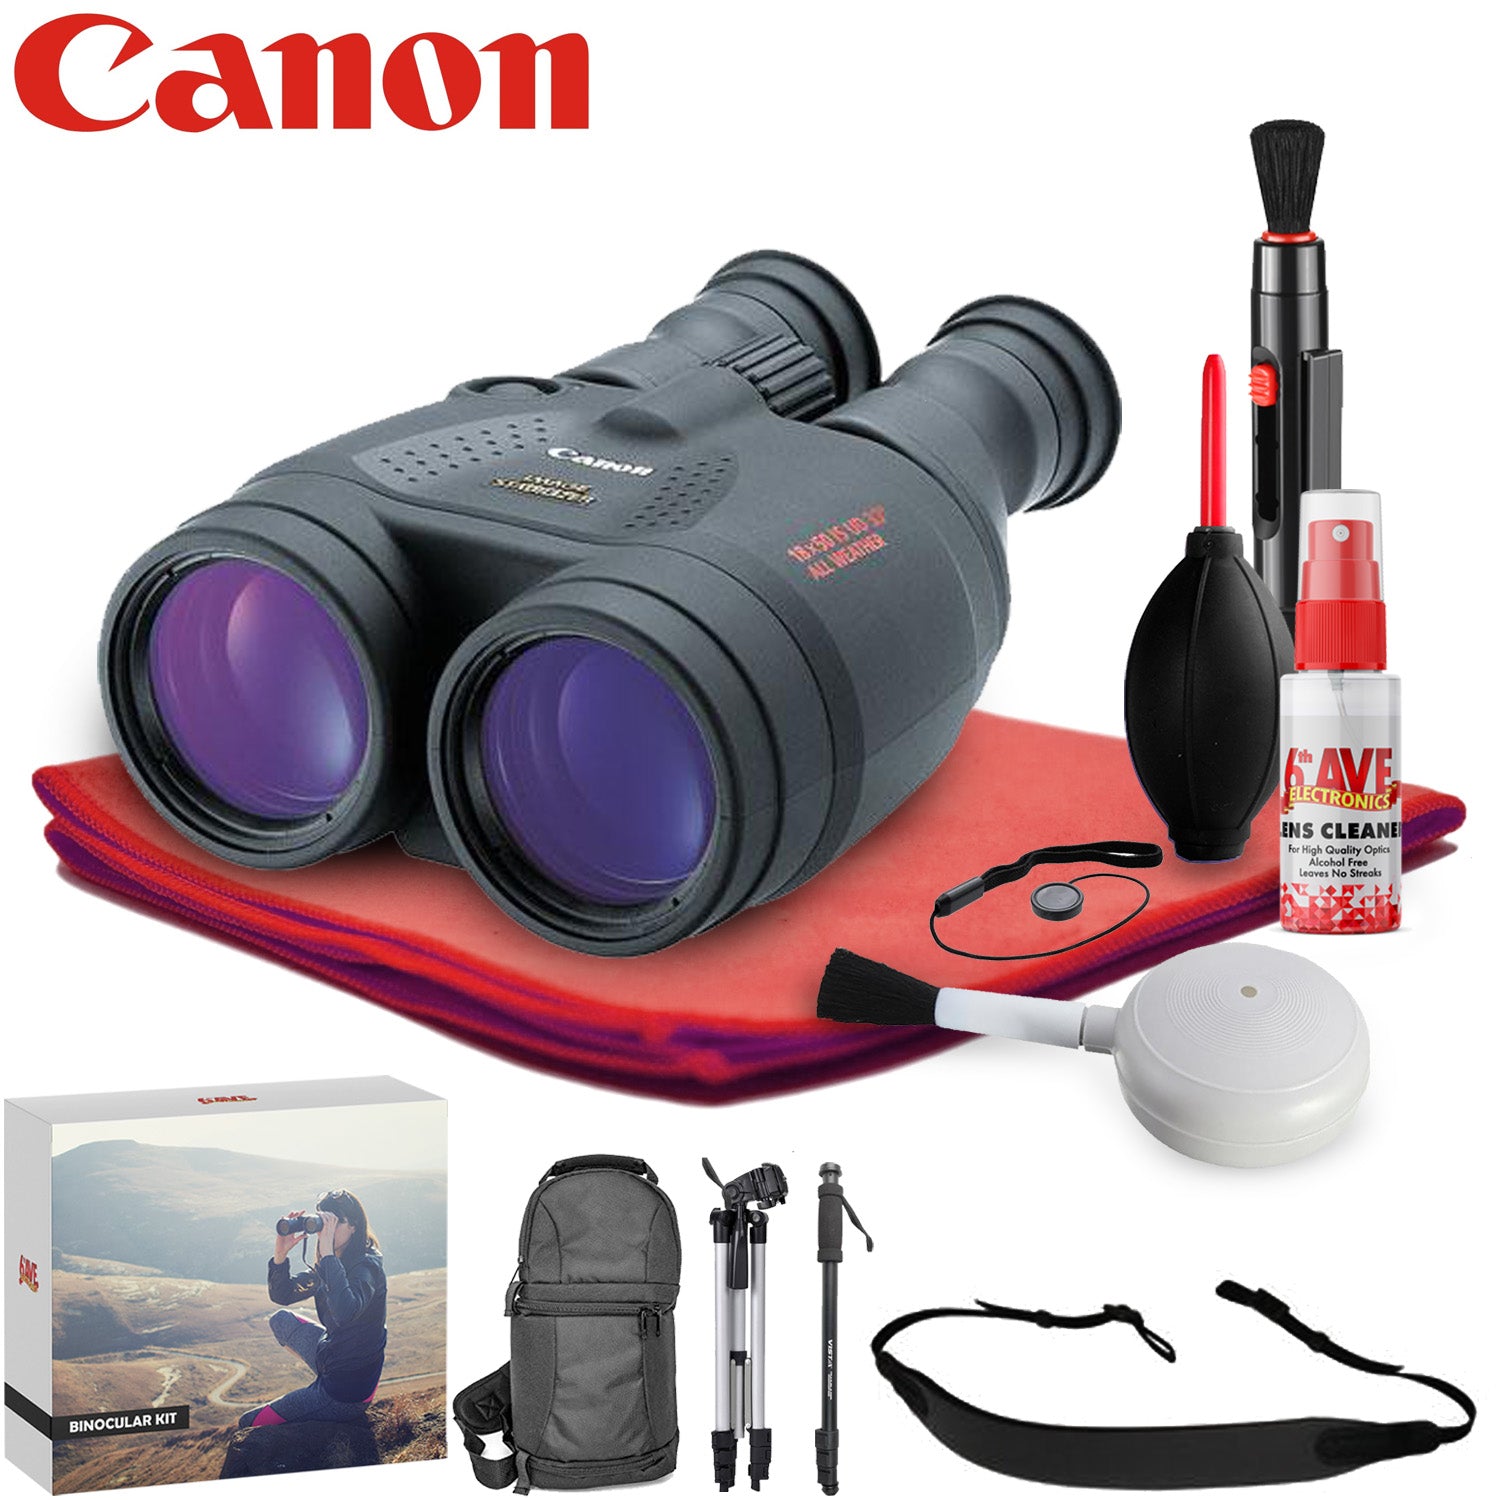 Canon 18x50 IS Image Stabilized Binocular  - Exclusive Outdoors Binoculars Kit